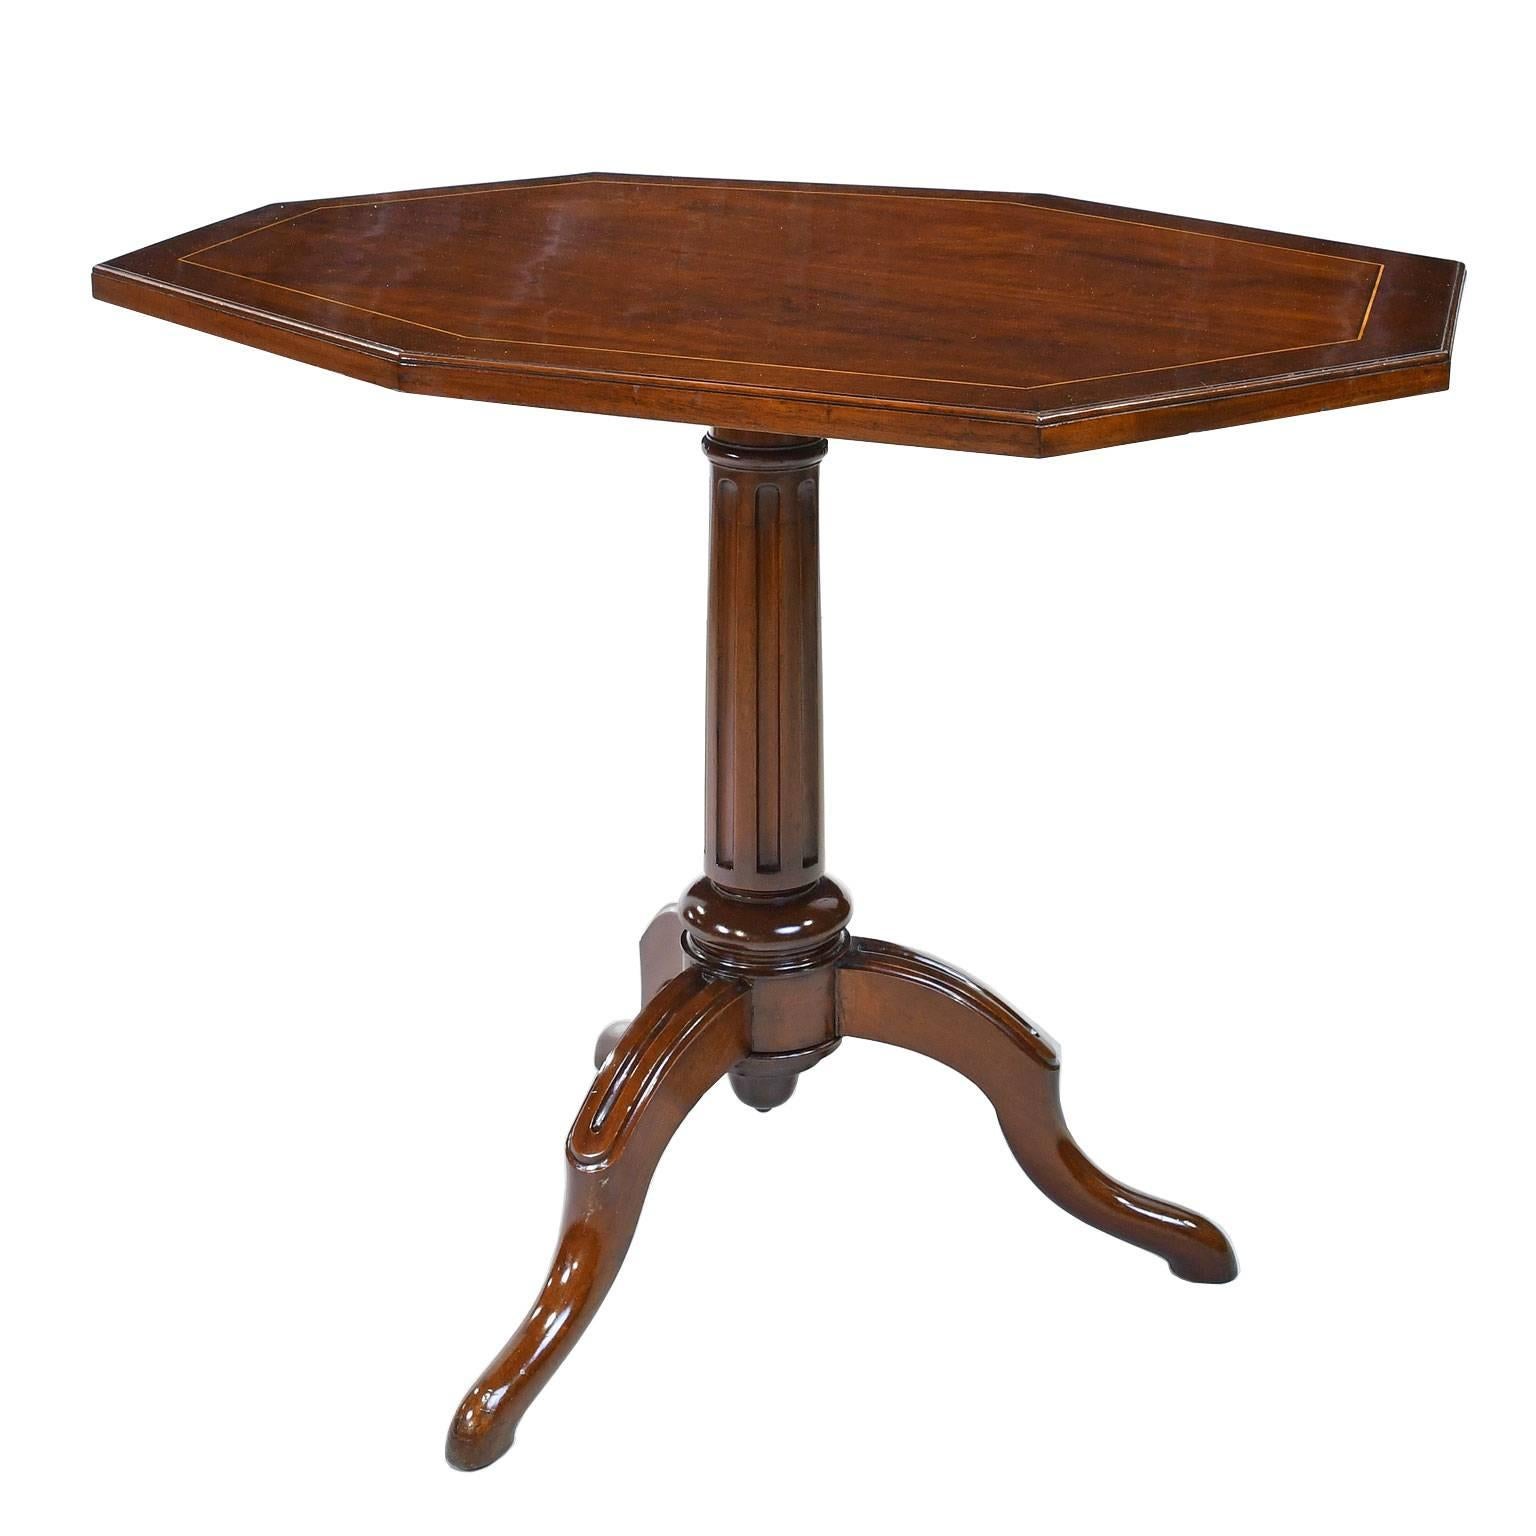 Polished 19th Century English Elongated Octagonal Tripod Tilt Top Table in Mahogany